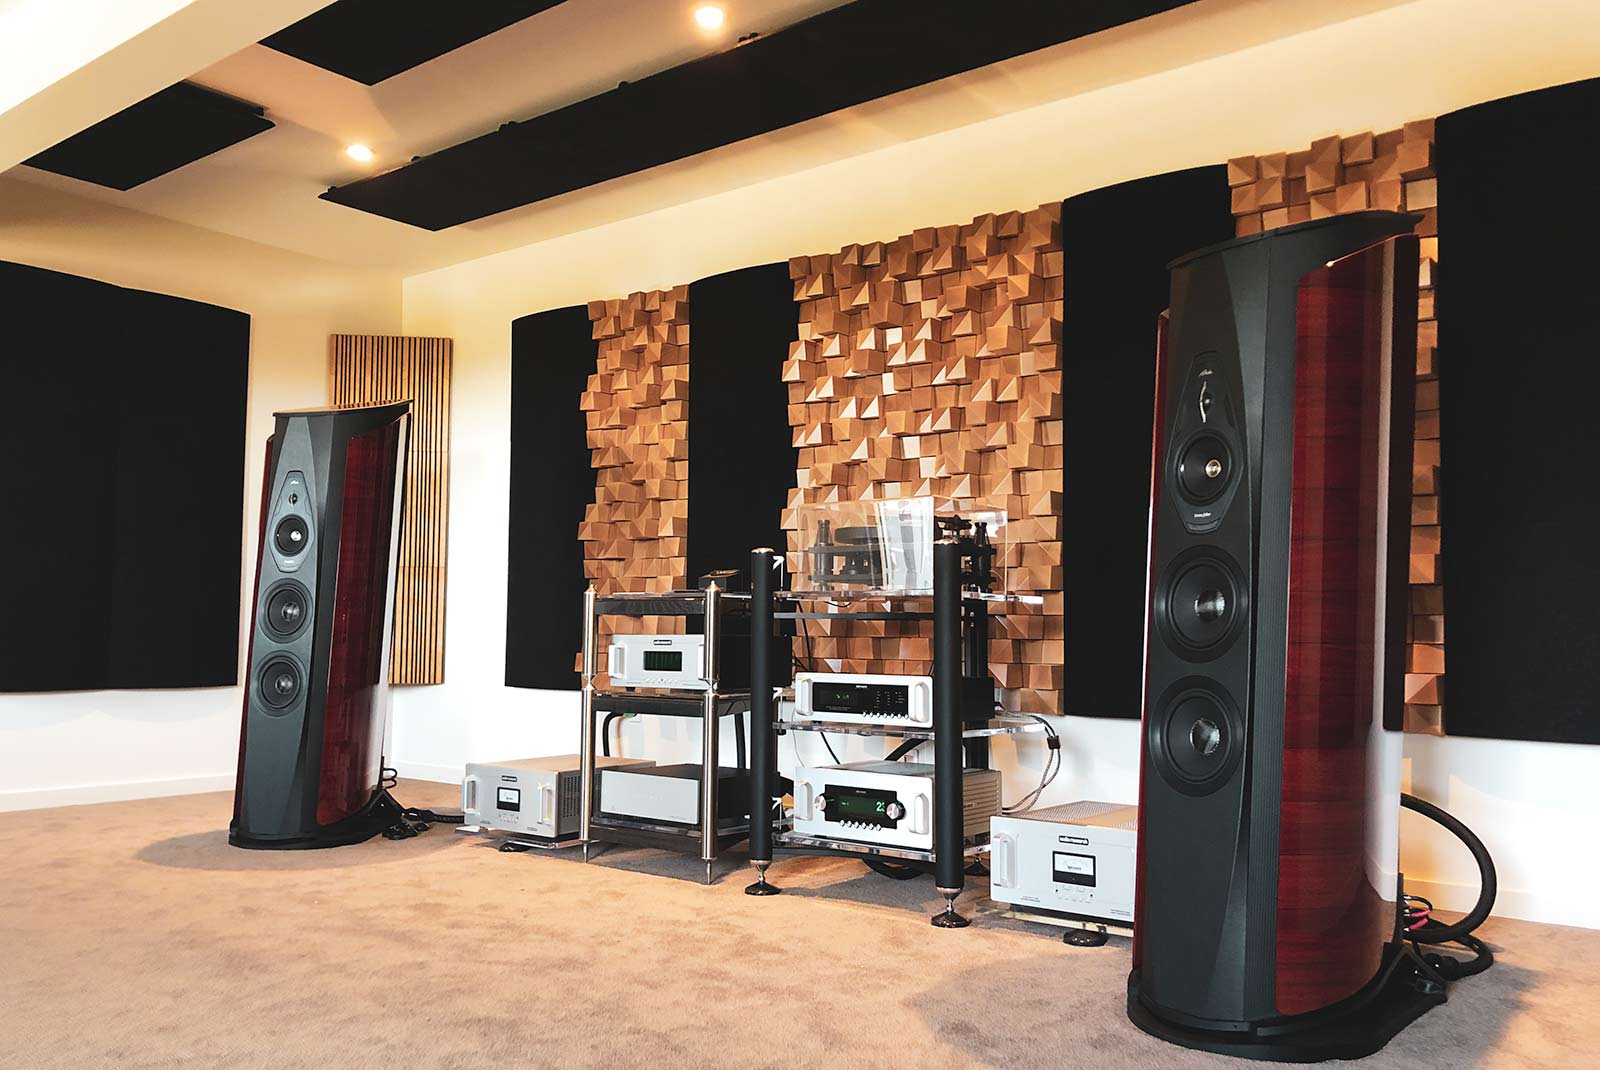 Soundline audio system speakers amplifier